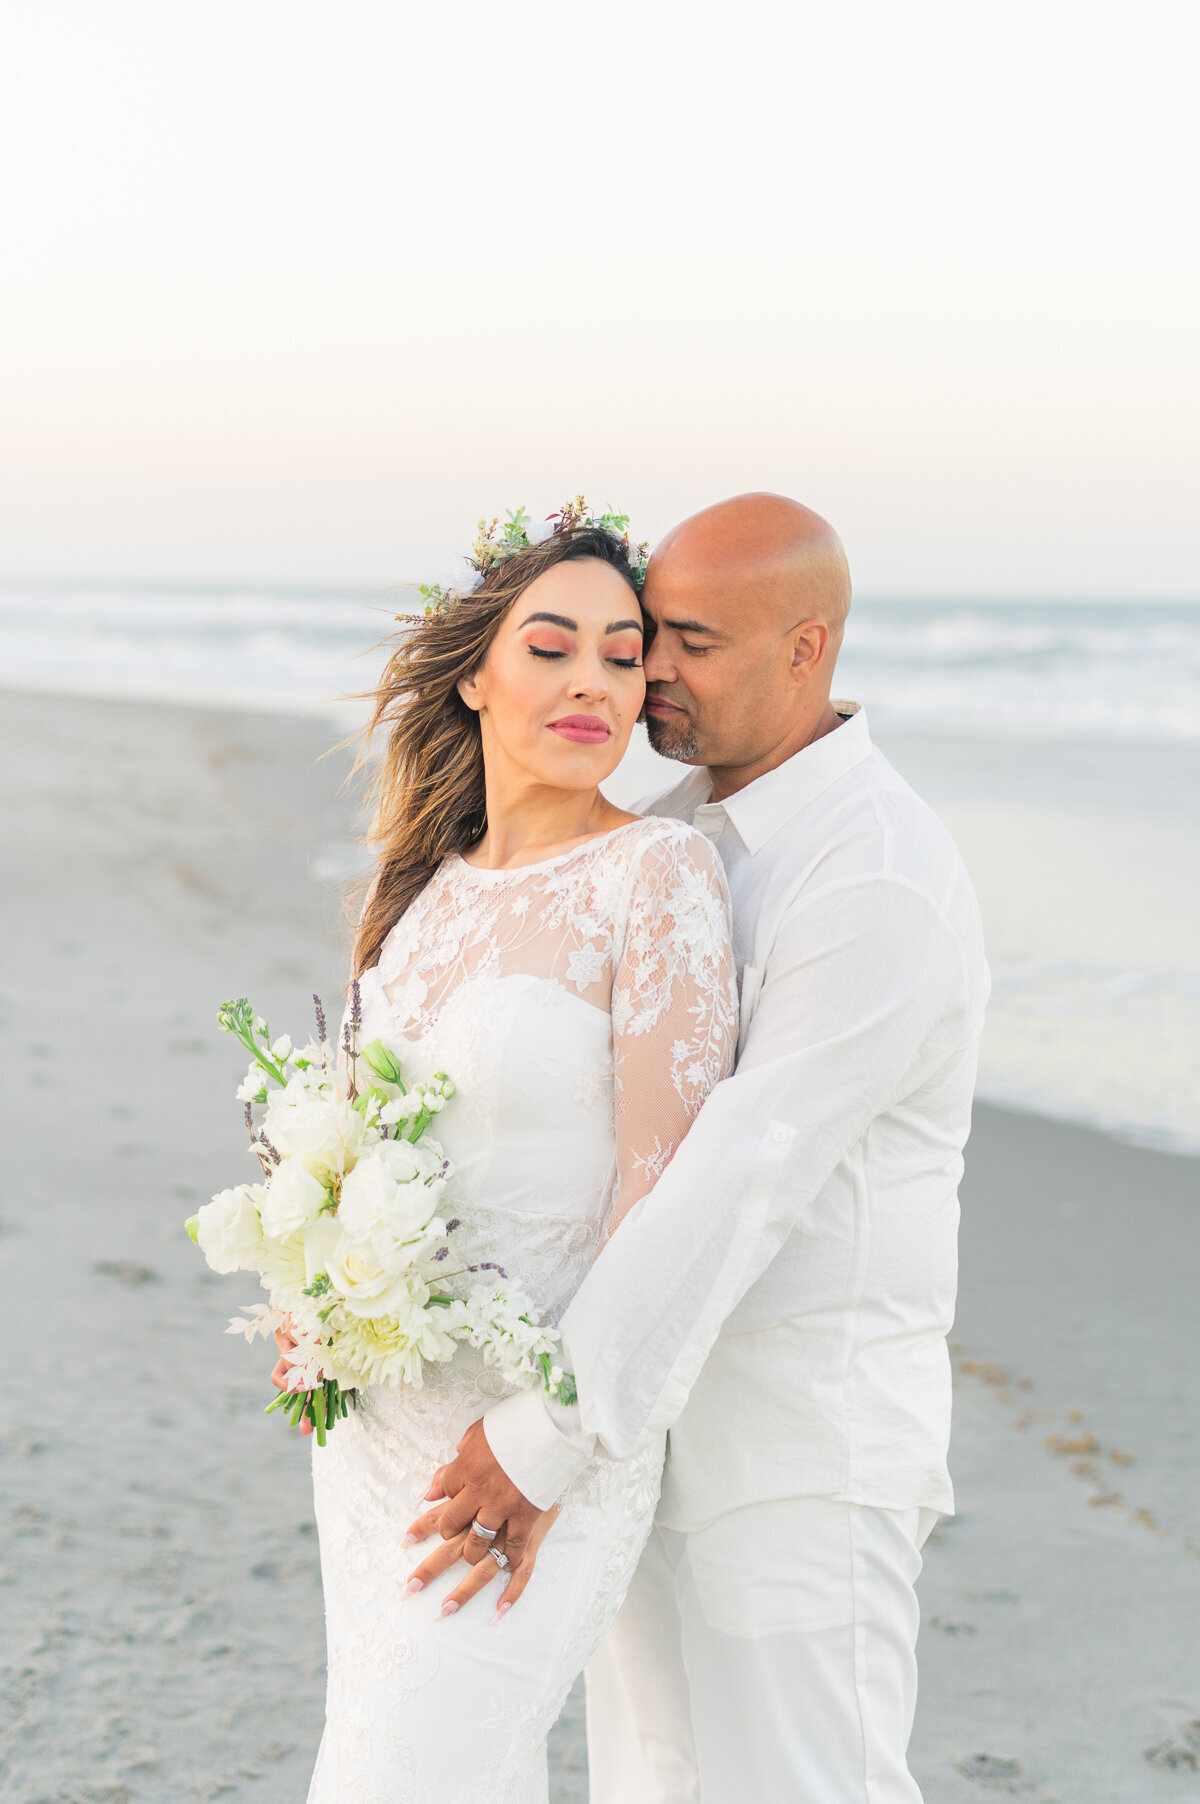 Keren + Carmelo | Melbourne Beach Wedding | Lisa Marshall Photography-34